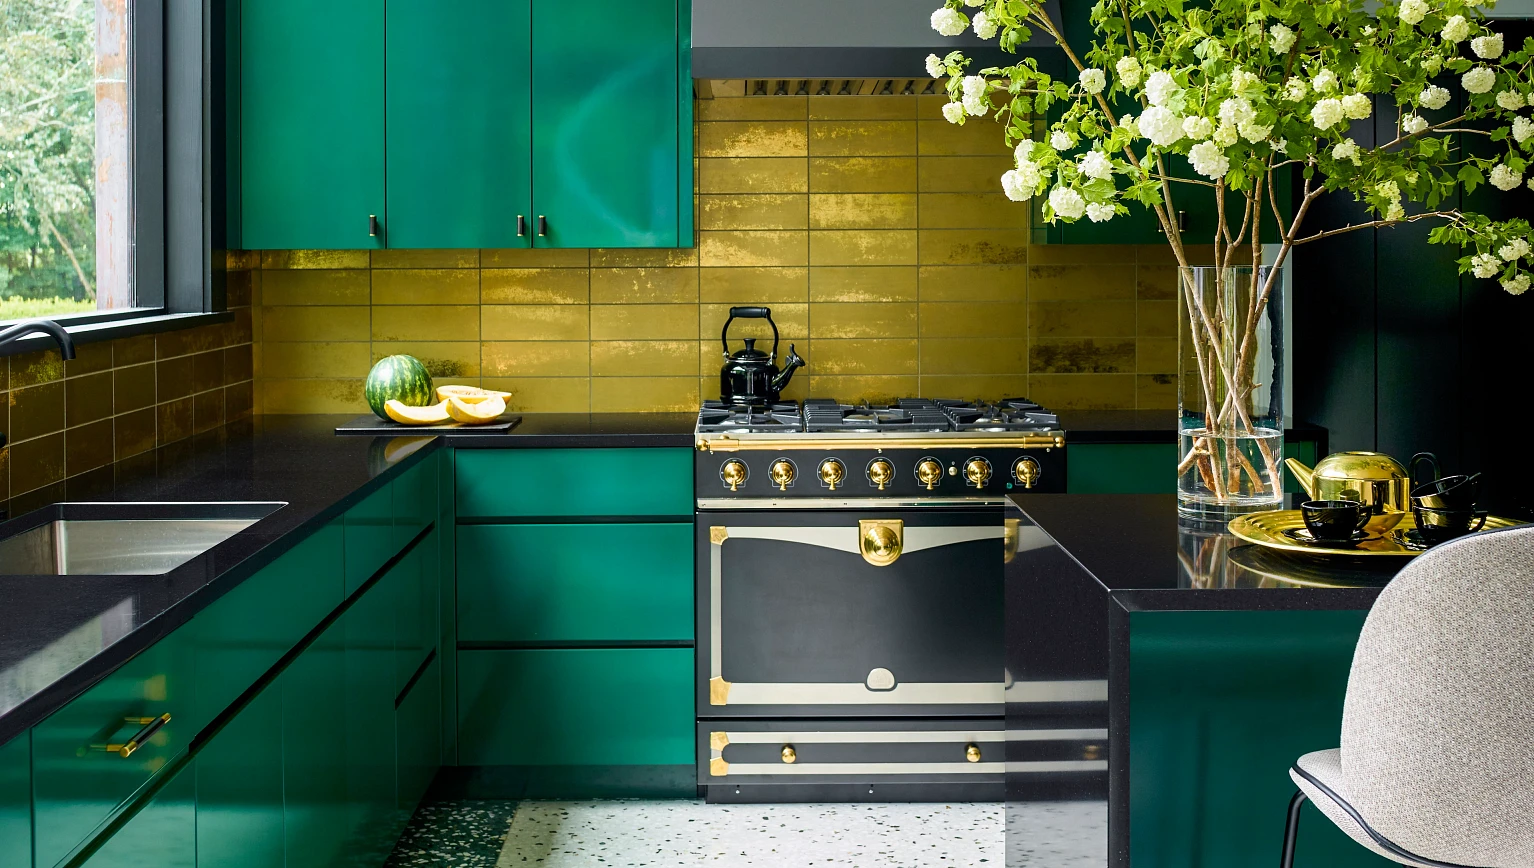 Kitchen with green cabinets, a gold tile backsplash and black quartz countertops